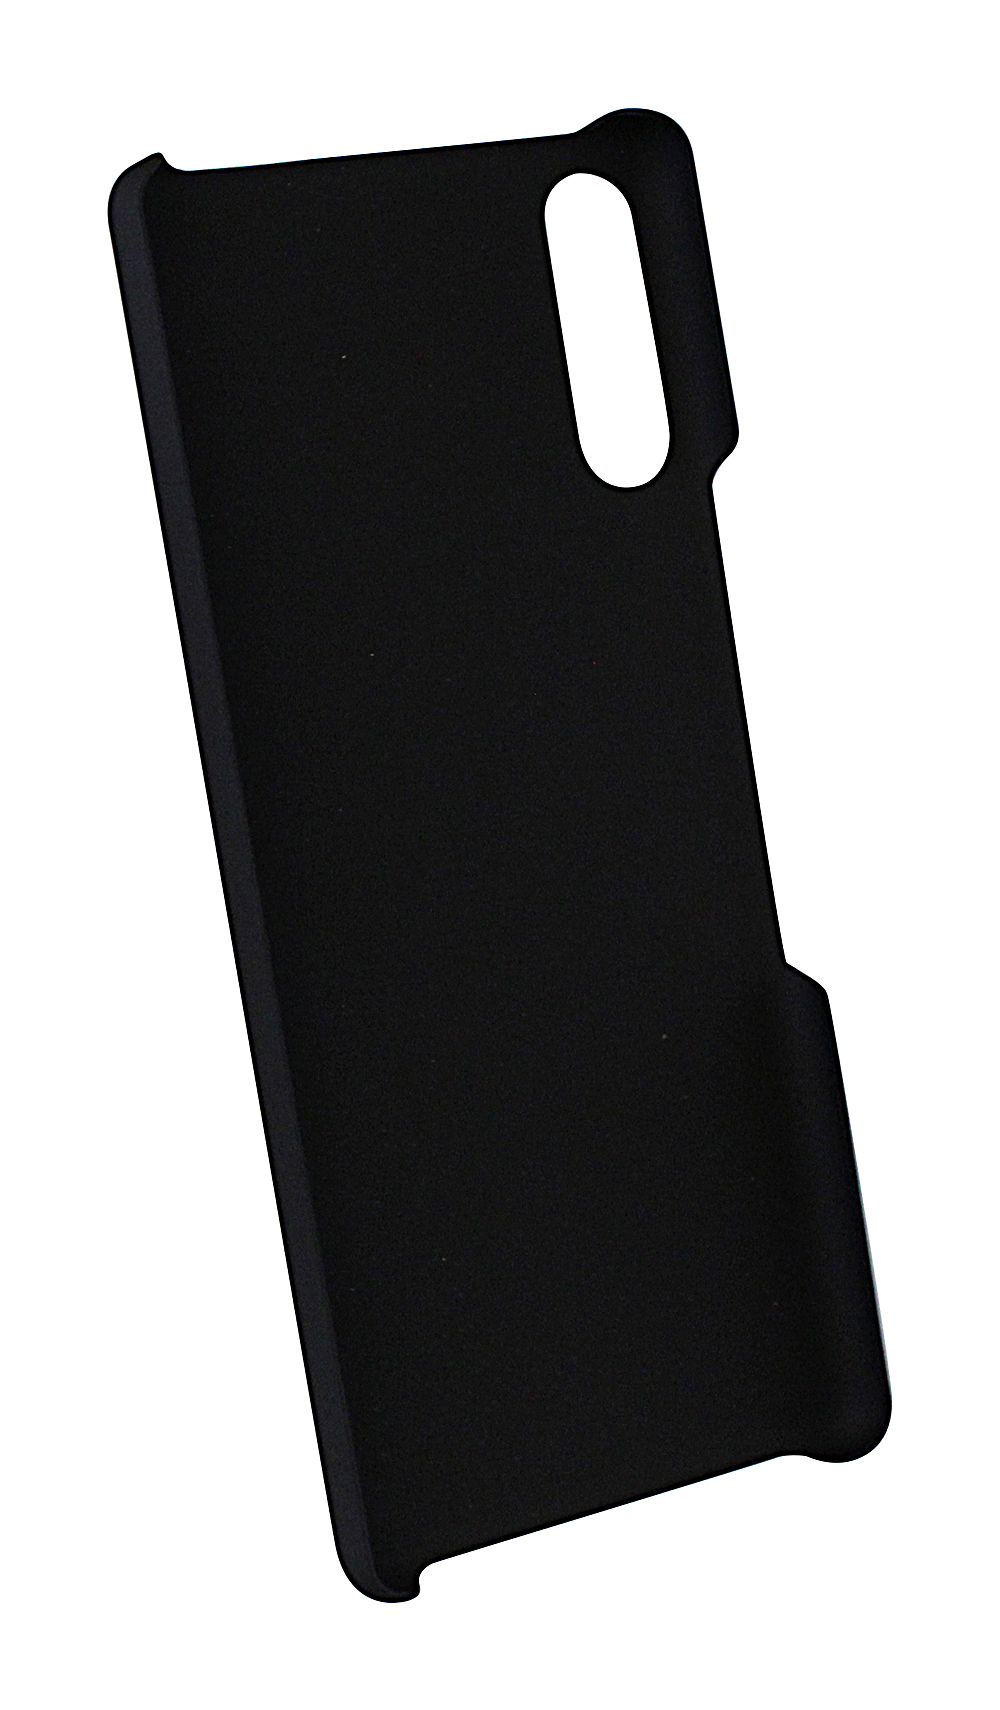 CoverInSkimblocker Magnet Designwallet Sony Xperia L4